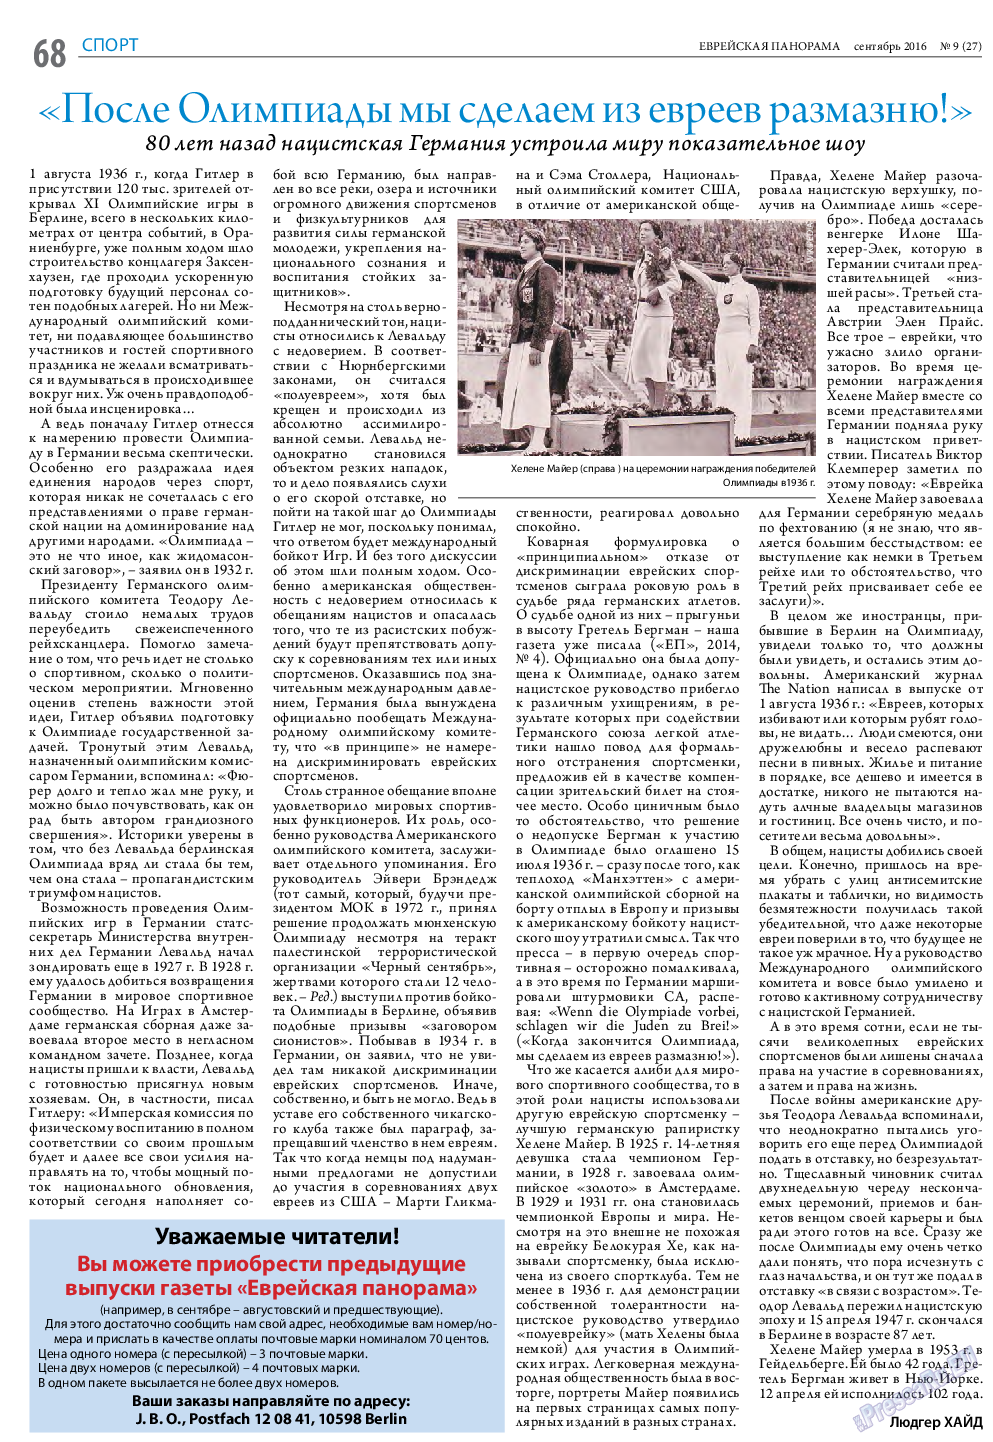 Еврейская панорама, газета. 2016 №9 стр.68